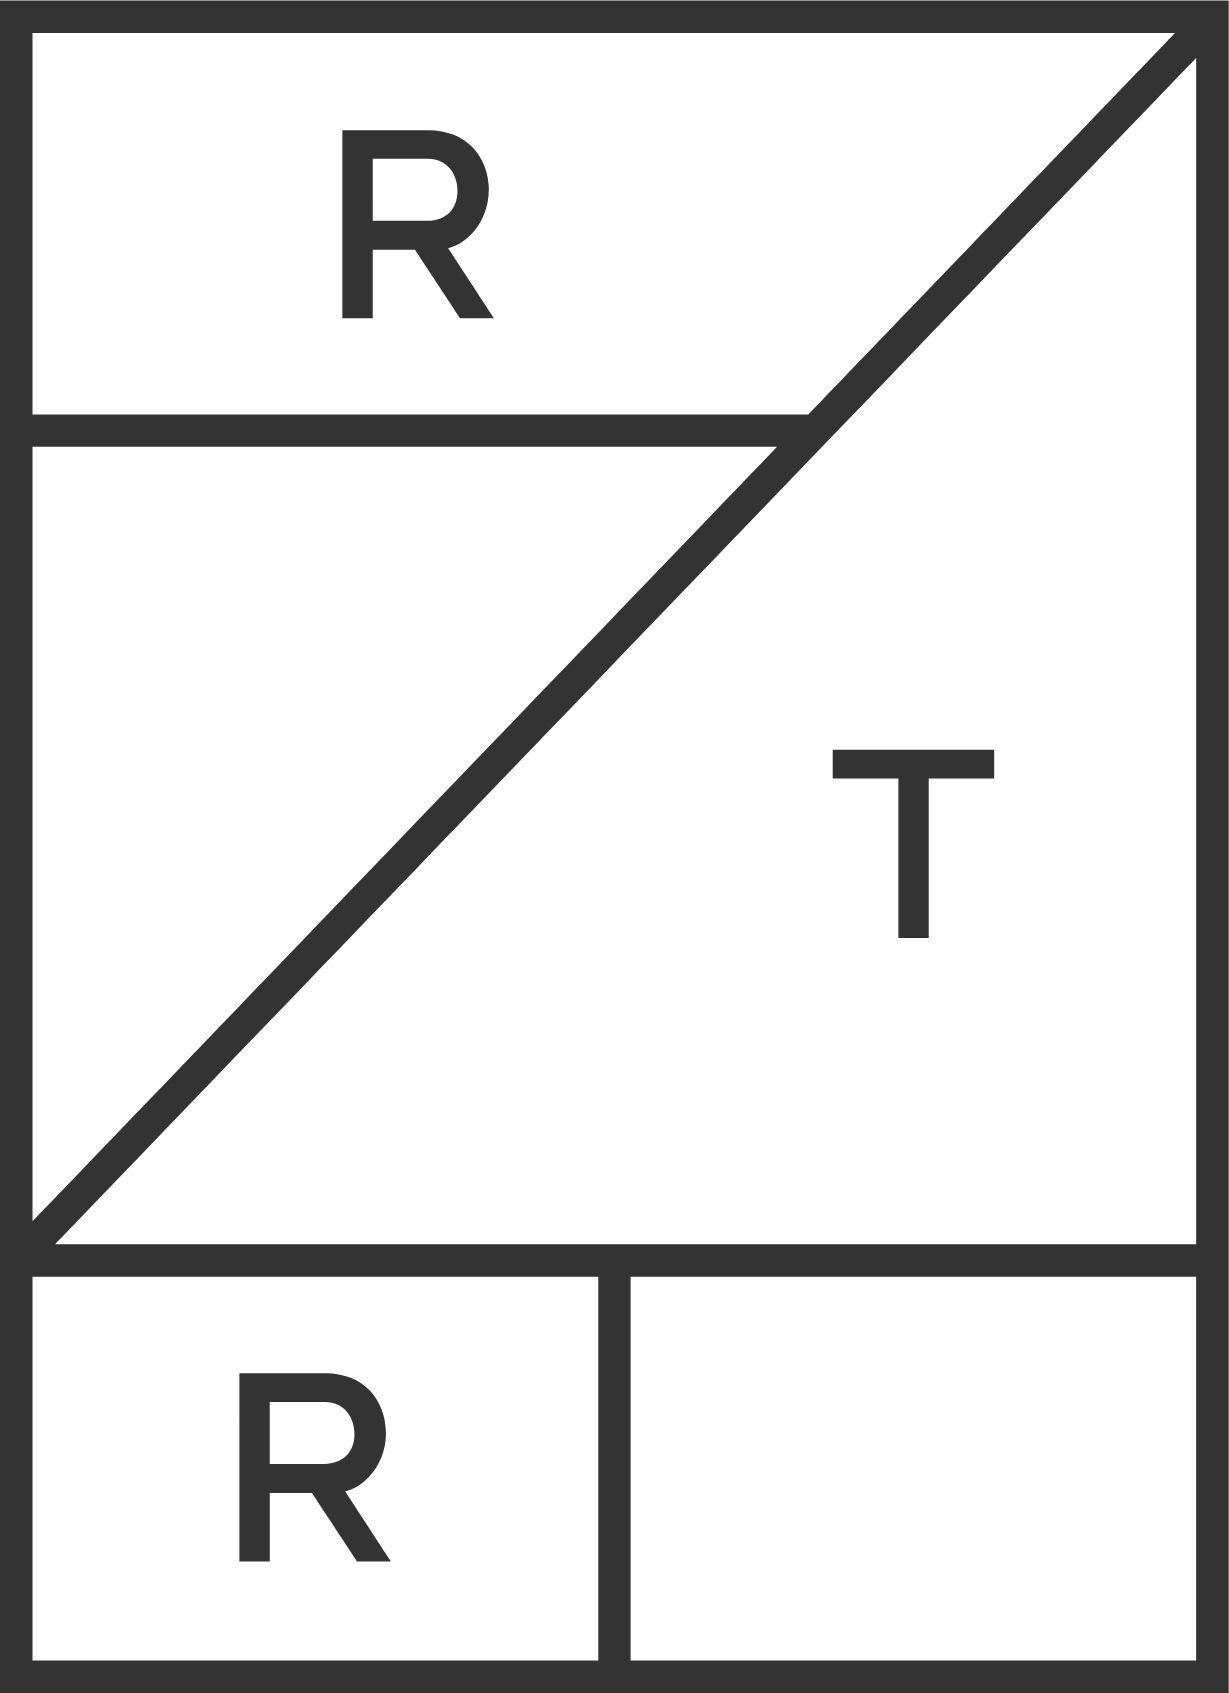 Rent the Runway logo (PNG transparent)